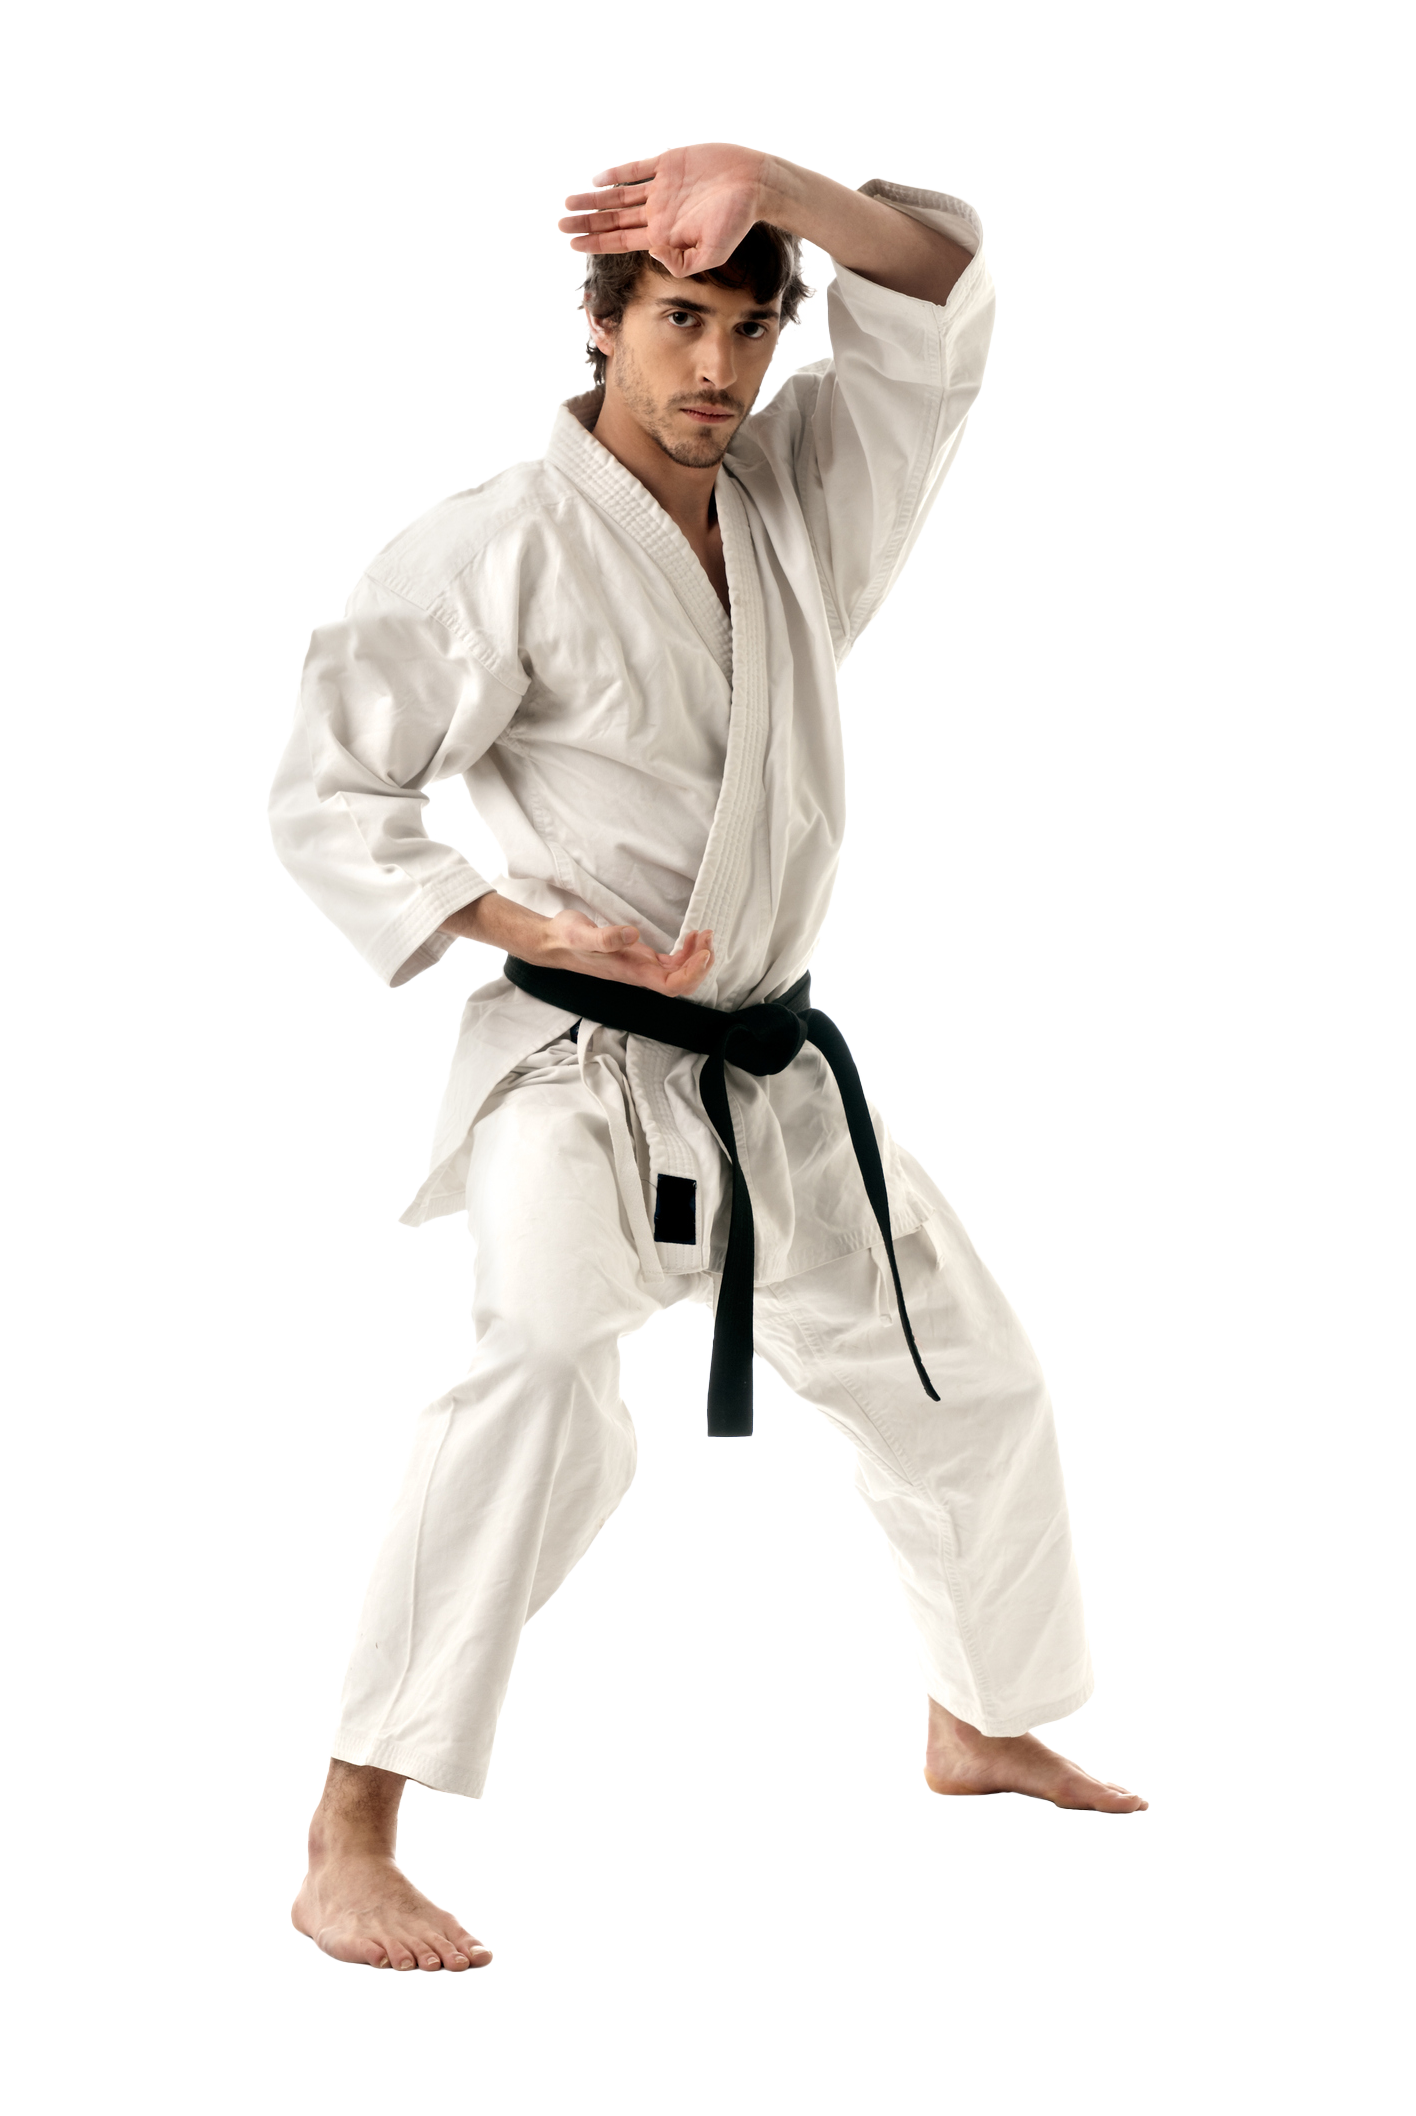 Man on a Fighting Position - Mason, OH - Mason Karate Fitness 